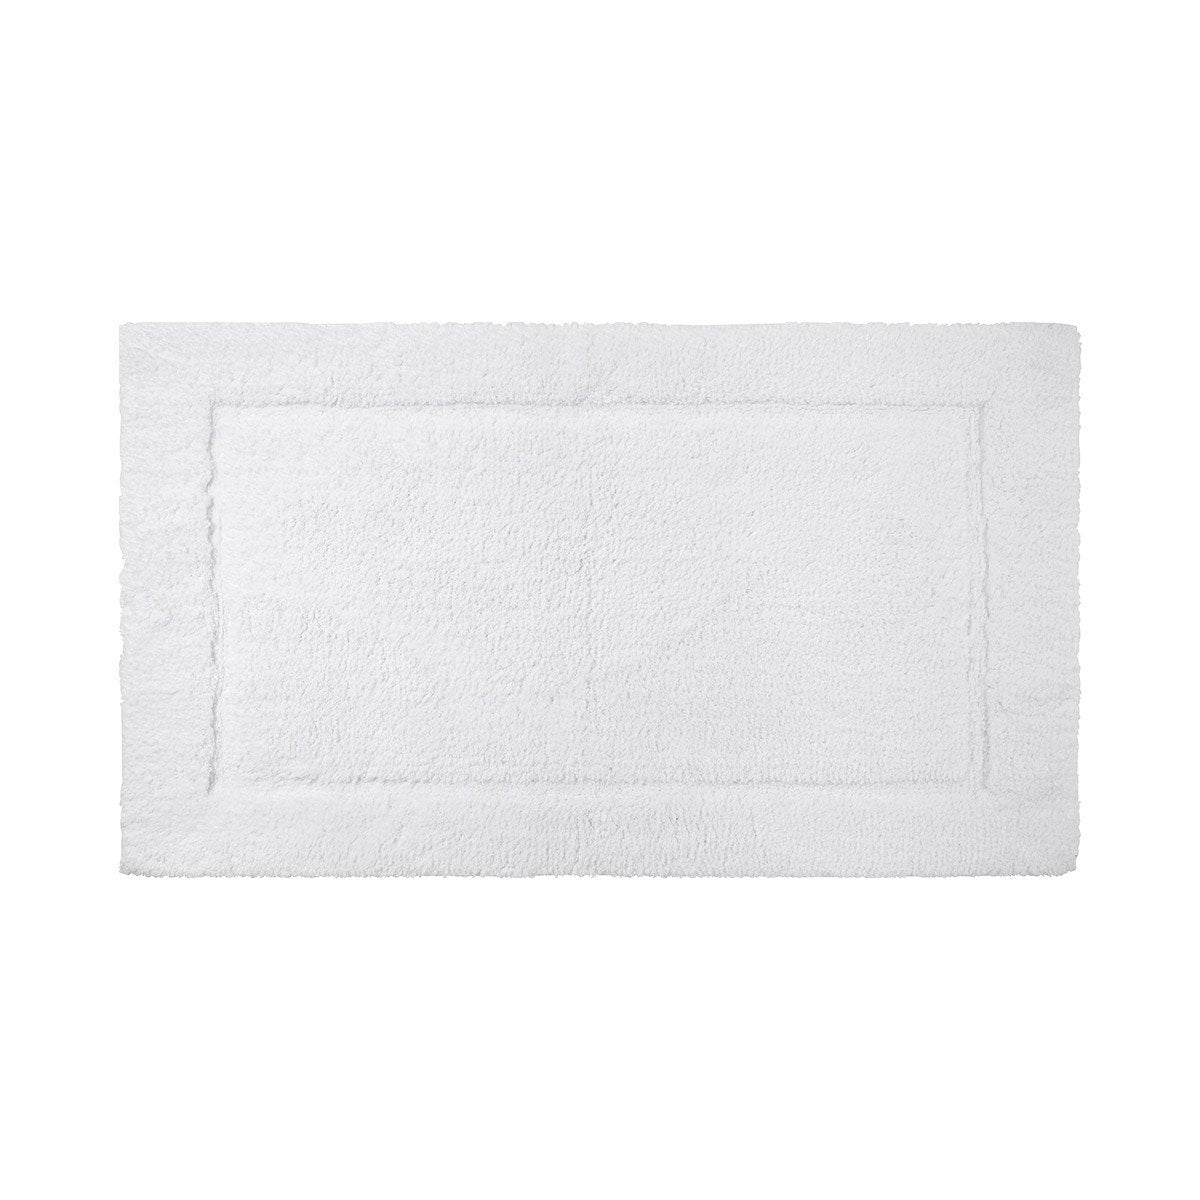 Prestige Blanc Bath Rug by Yves Delorme | Fig Linens - White bath rug, mat, non slip, cotton